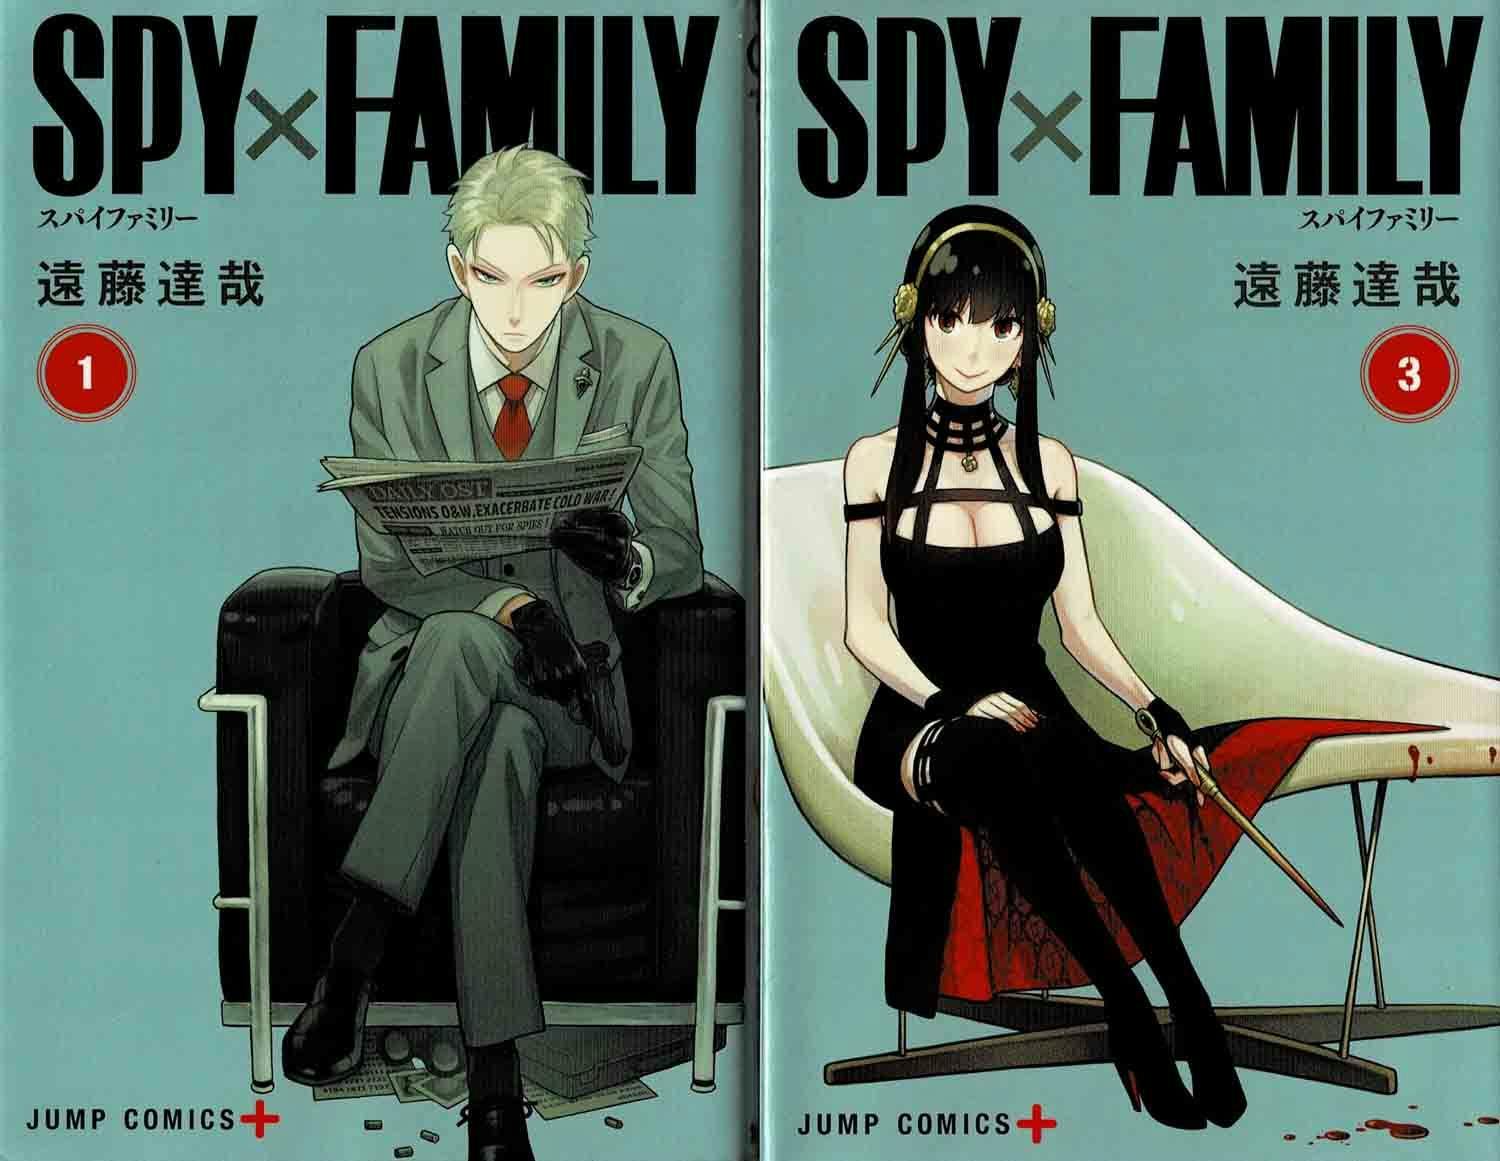 The hugely popular Japanese manga, Spy x Family.